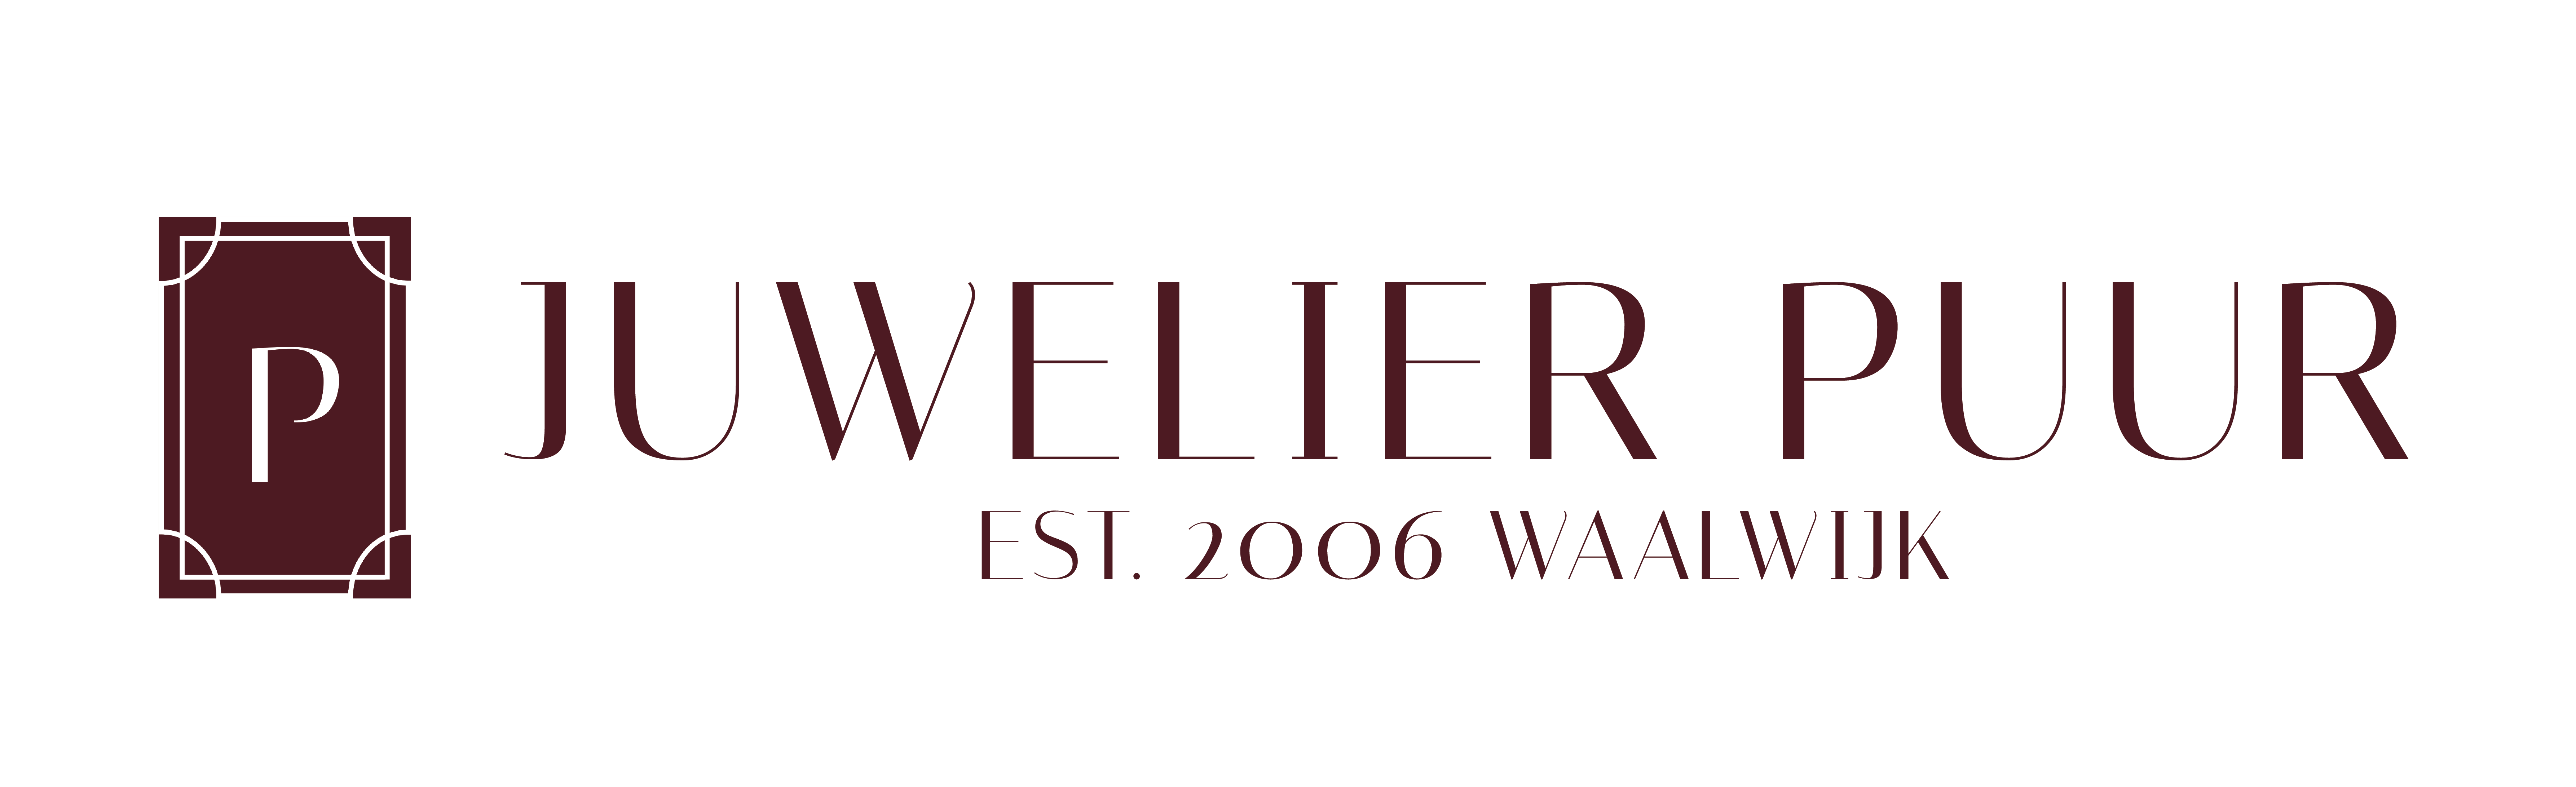 Juwelier Puur logo